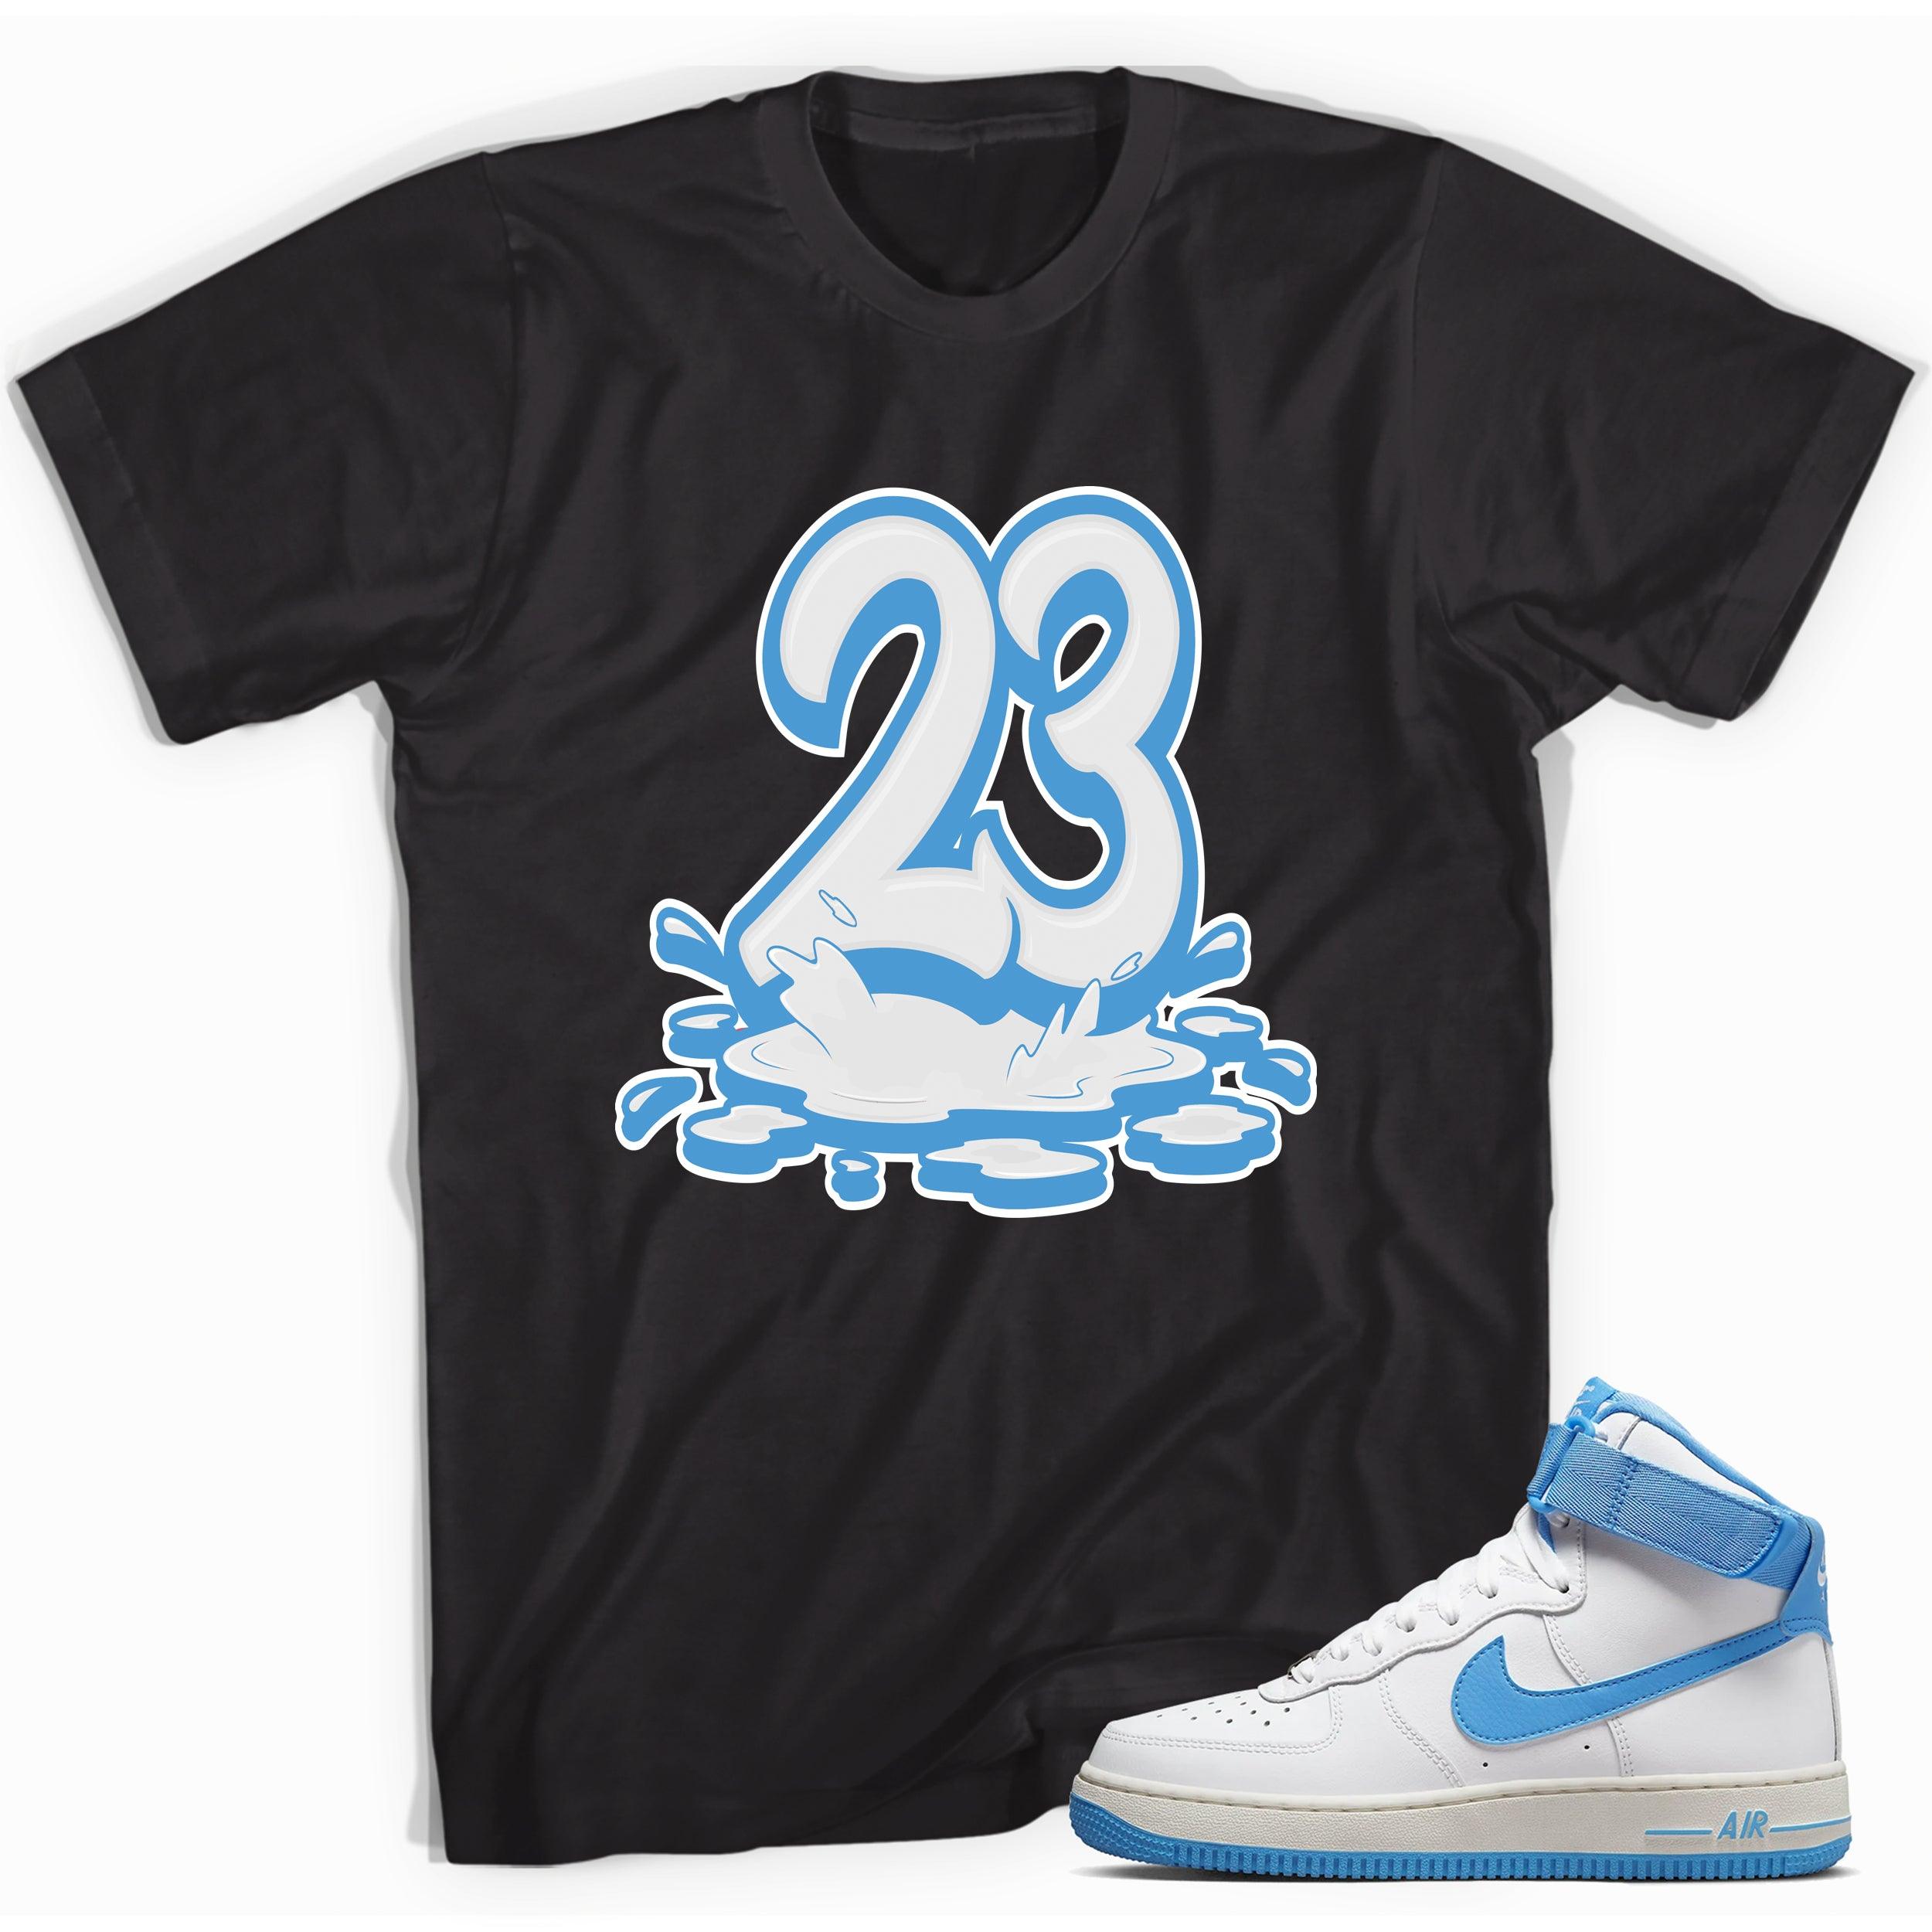 23 Melting Shirt Nike Air Force 1 High White University Blue photo